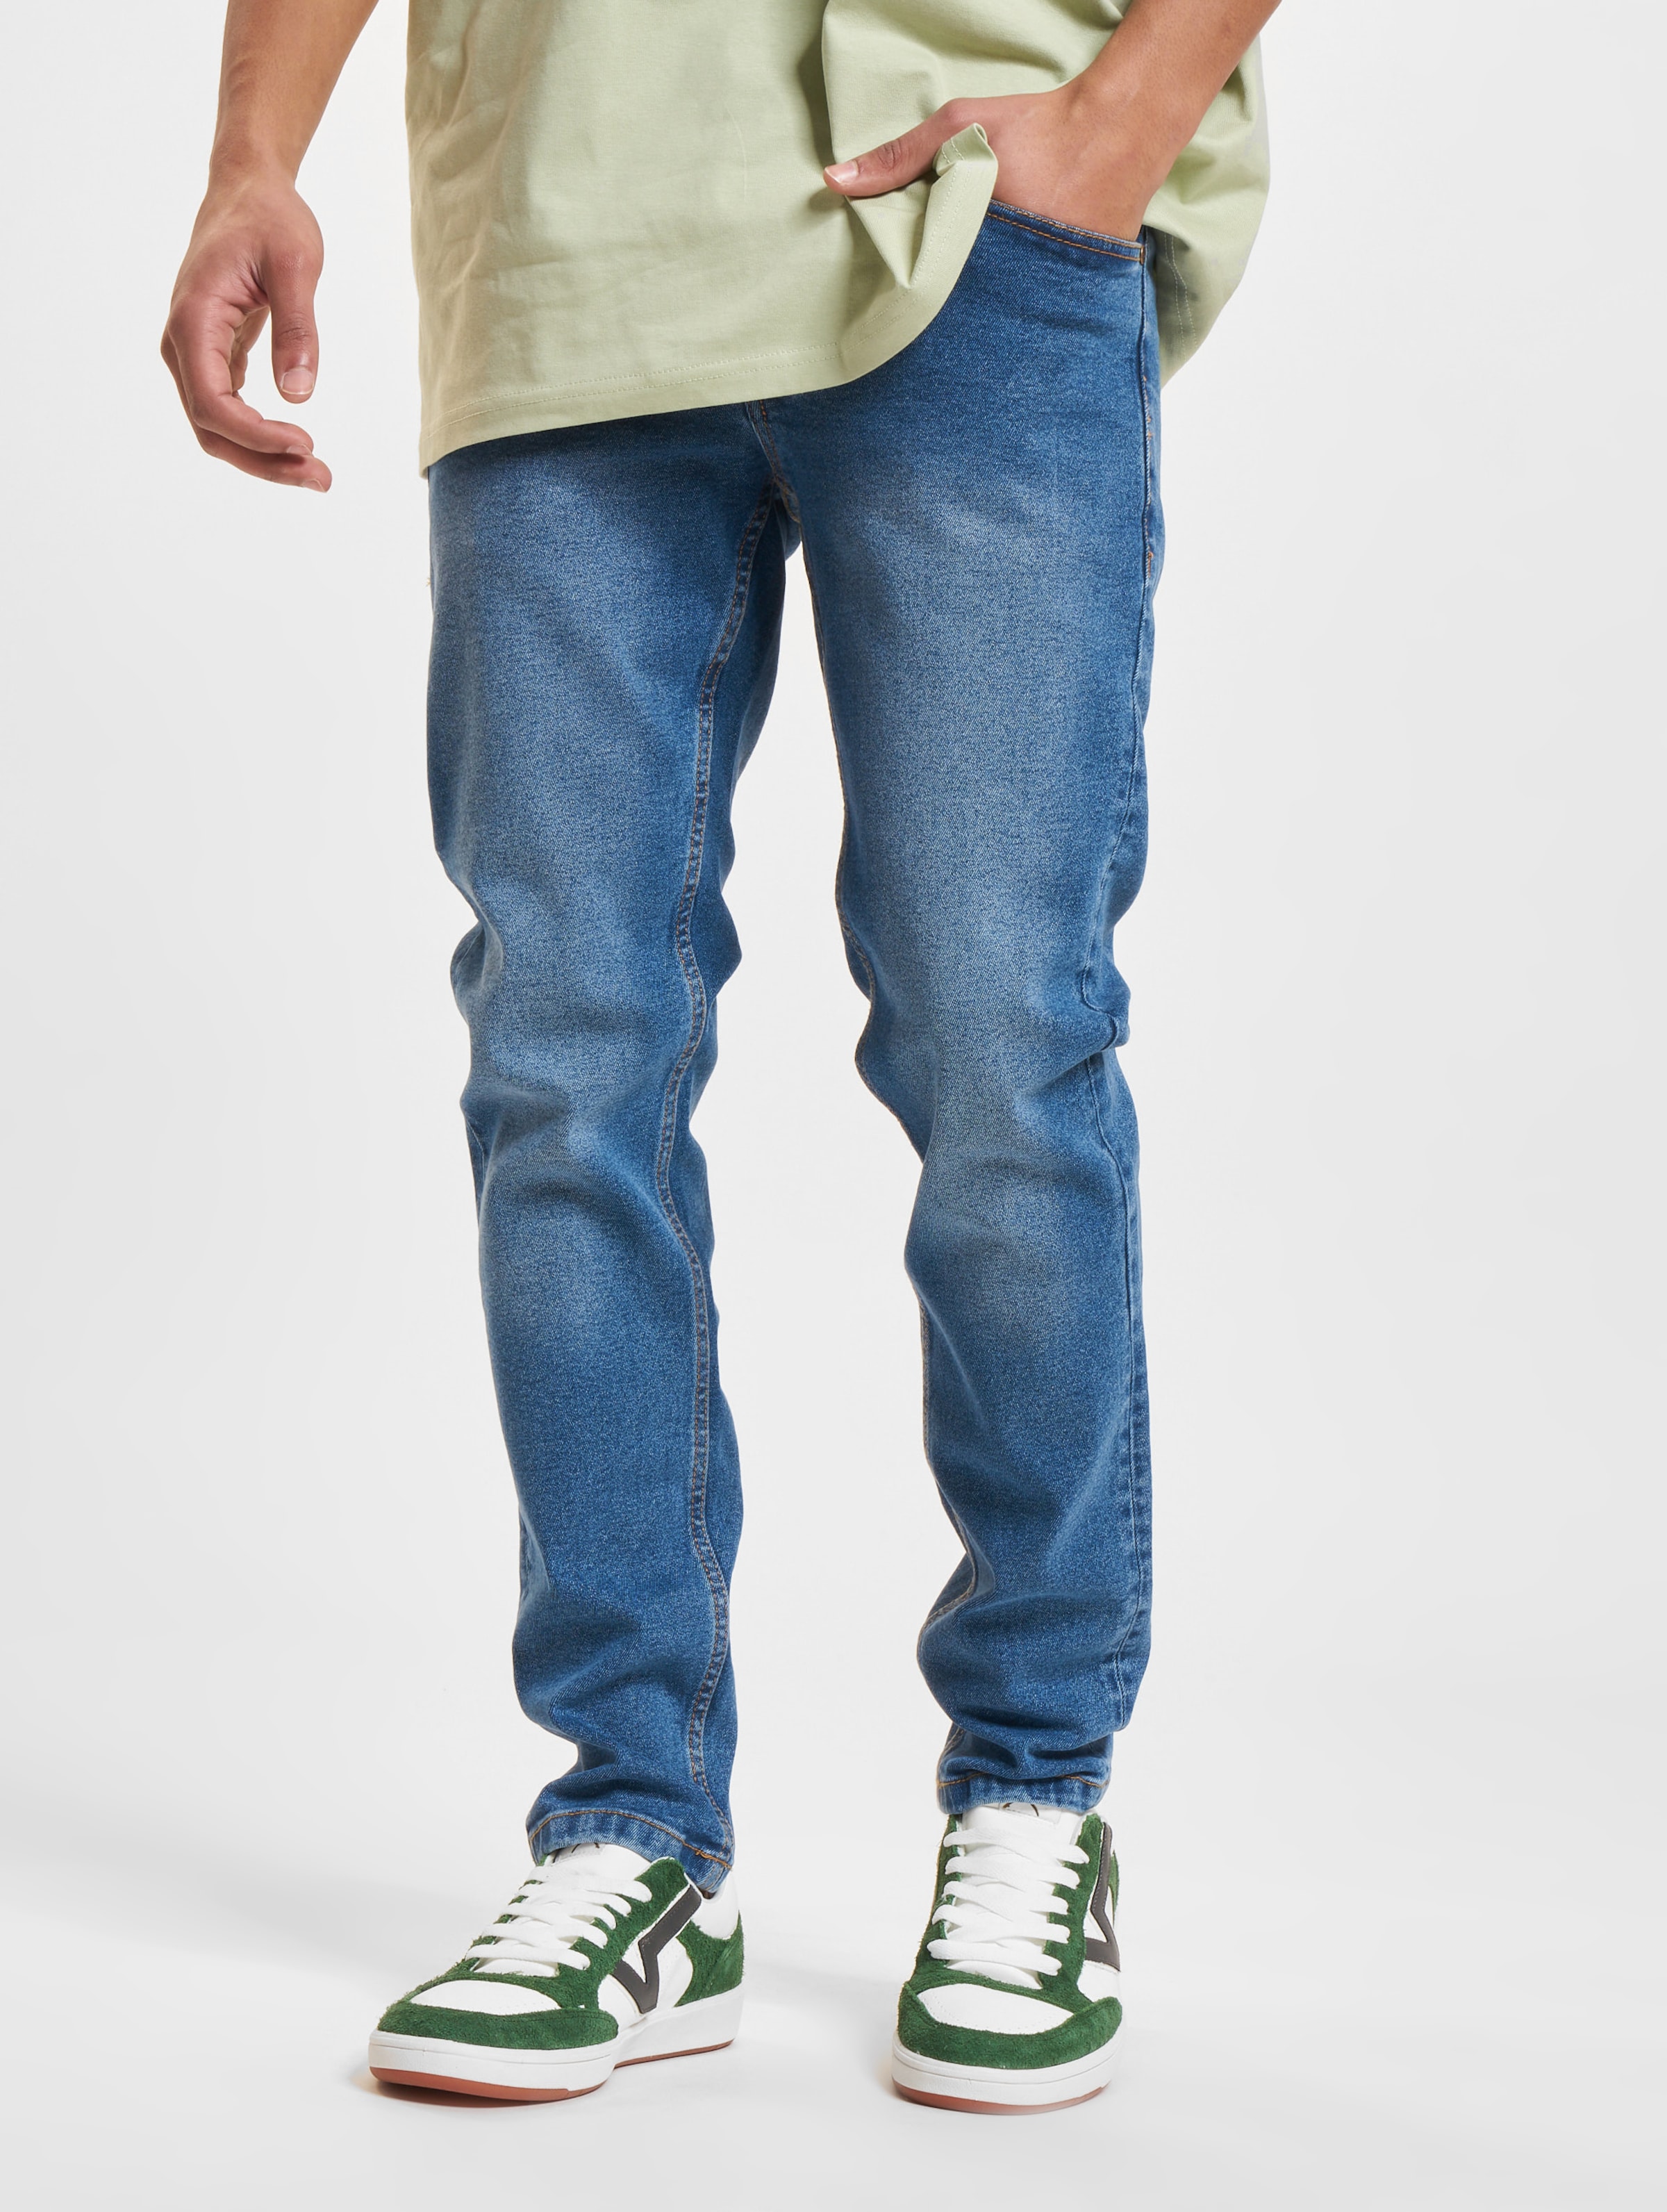 Denim Project Mr. Red Skinny Fit Jeans Mannen op kleur blauw, Maat 2834